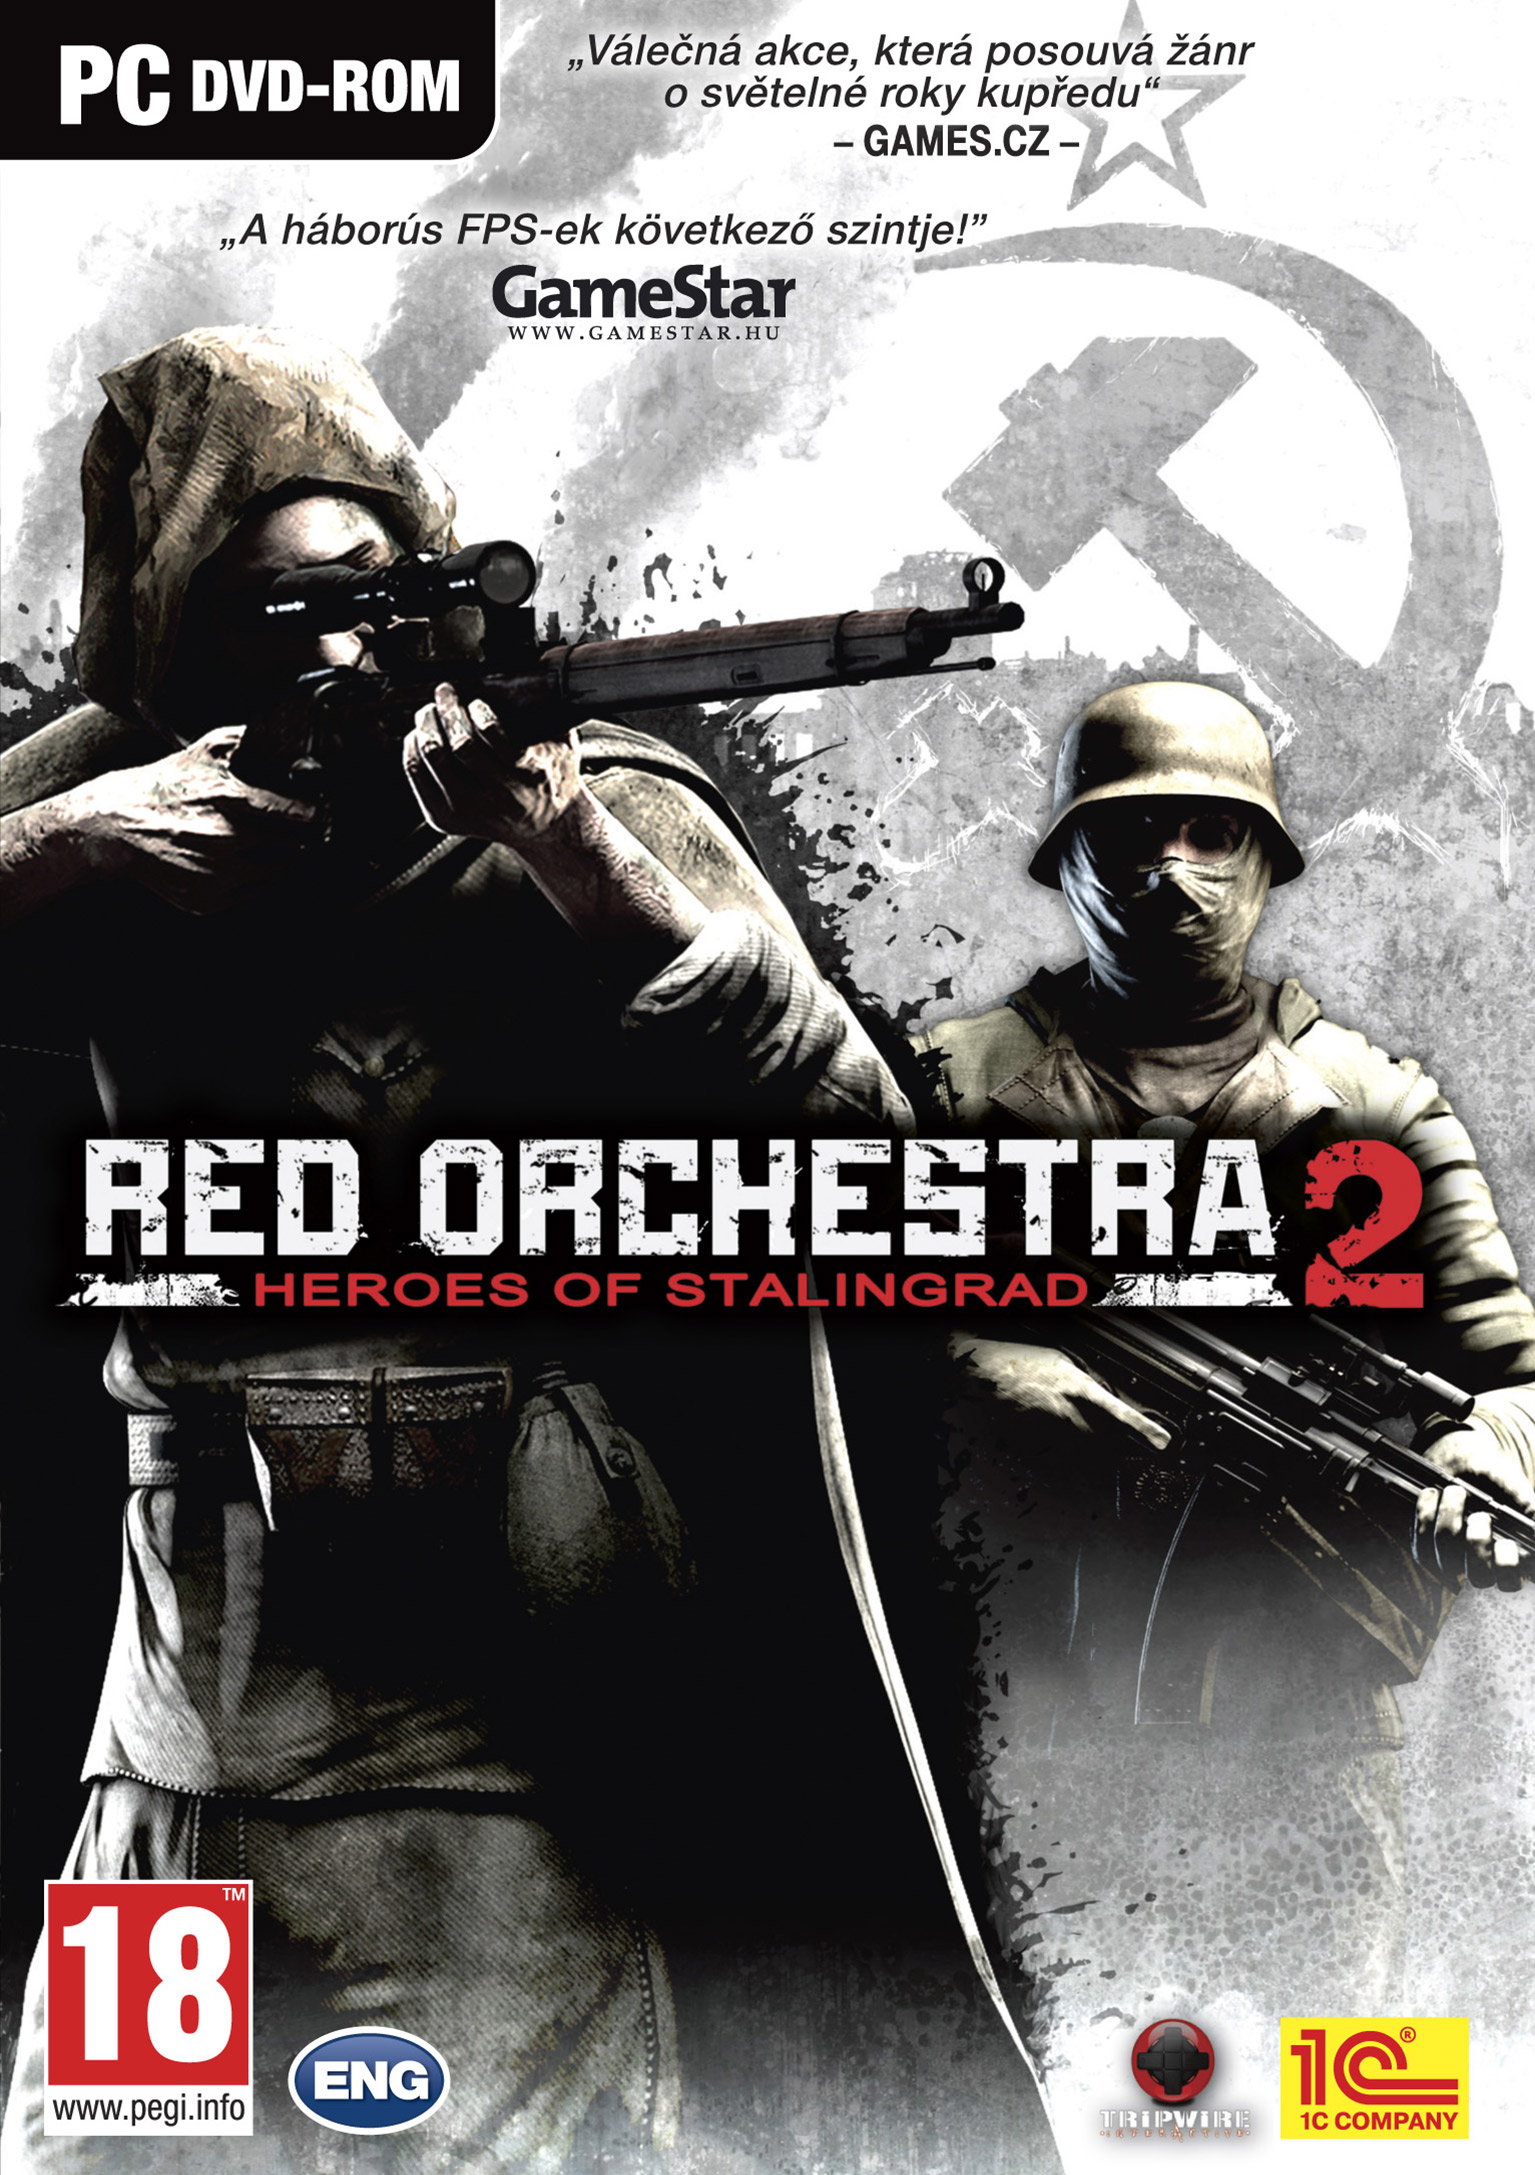 Red Orchestra 2: Heroes of Stalingrad - predn DVD obal